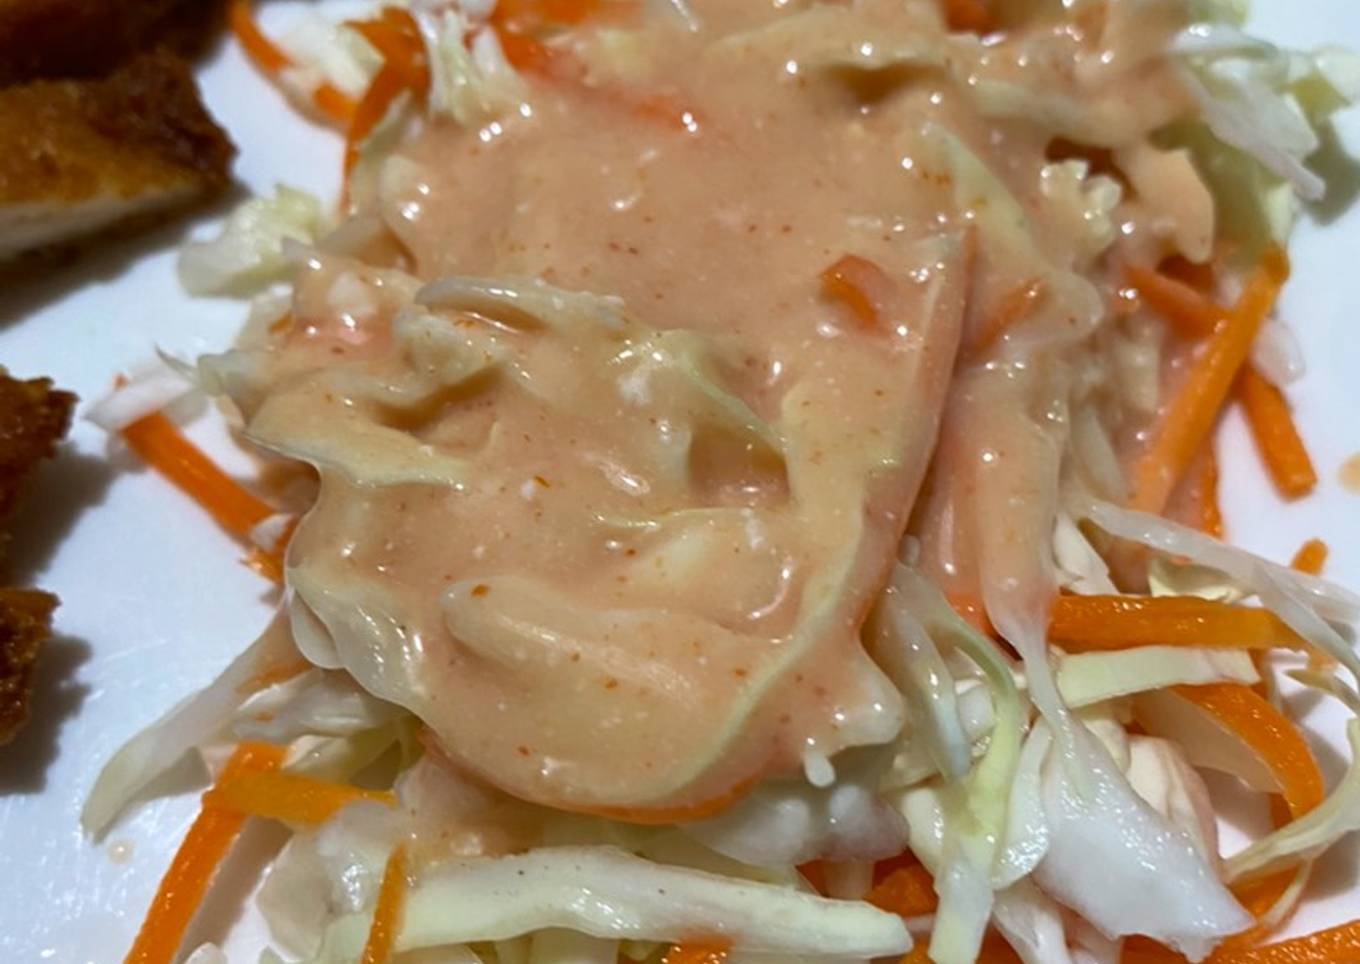 Salad ala Hokben - resep kuliner nusantara